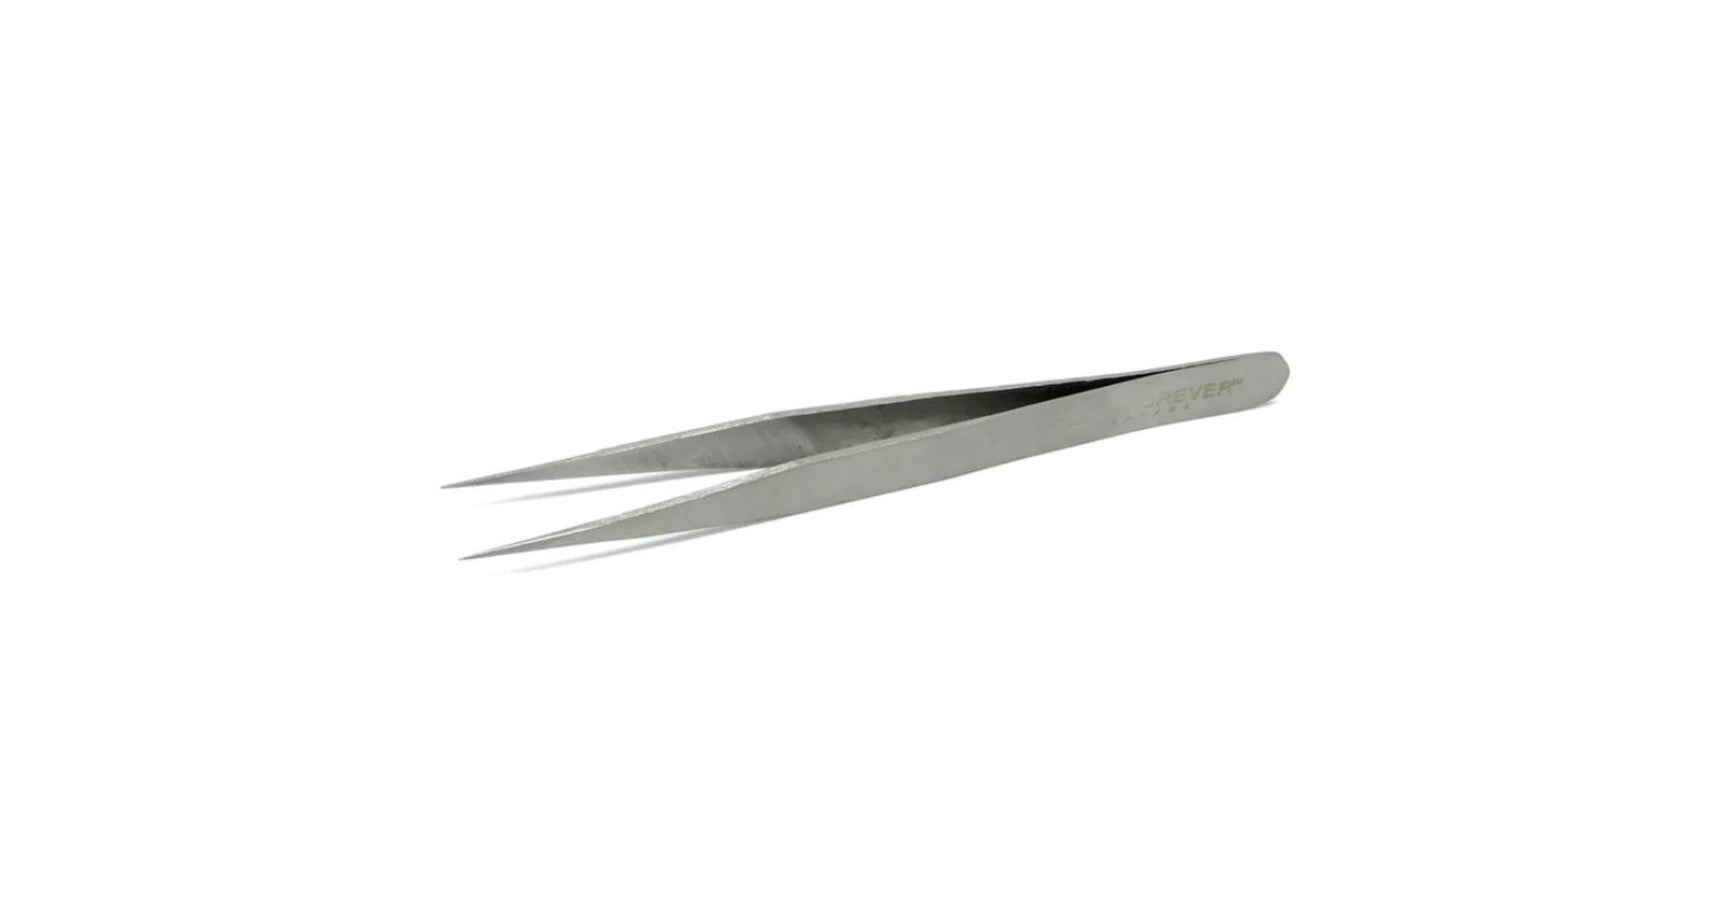 Lash Forever Stainless steel lash extension tweezer - straight